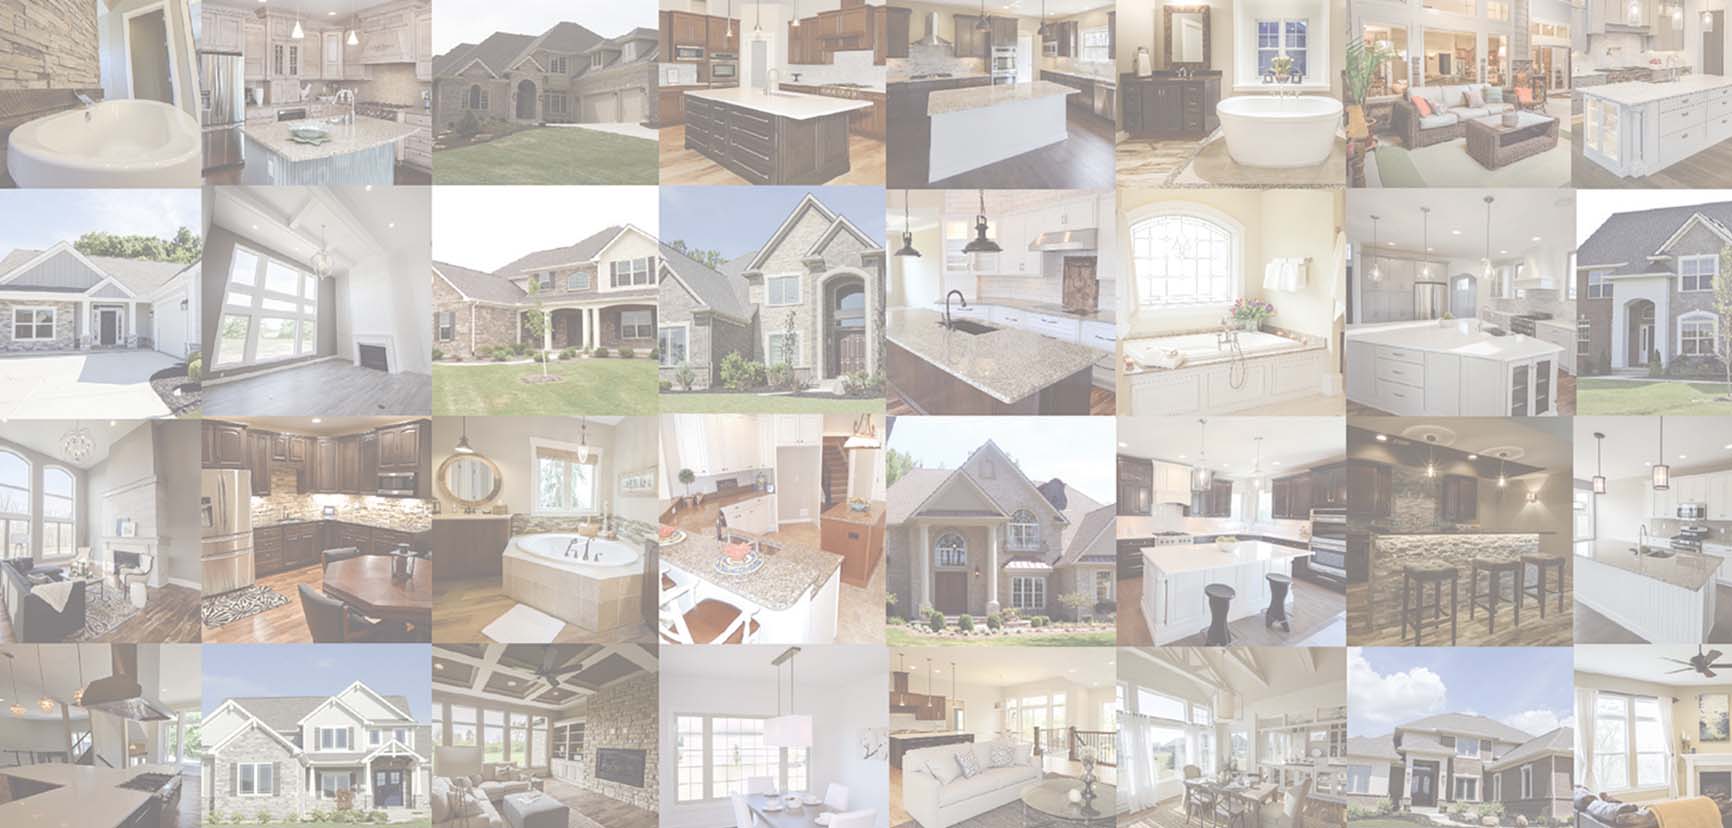 Design Homes picture collage